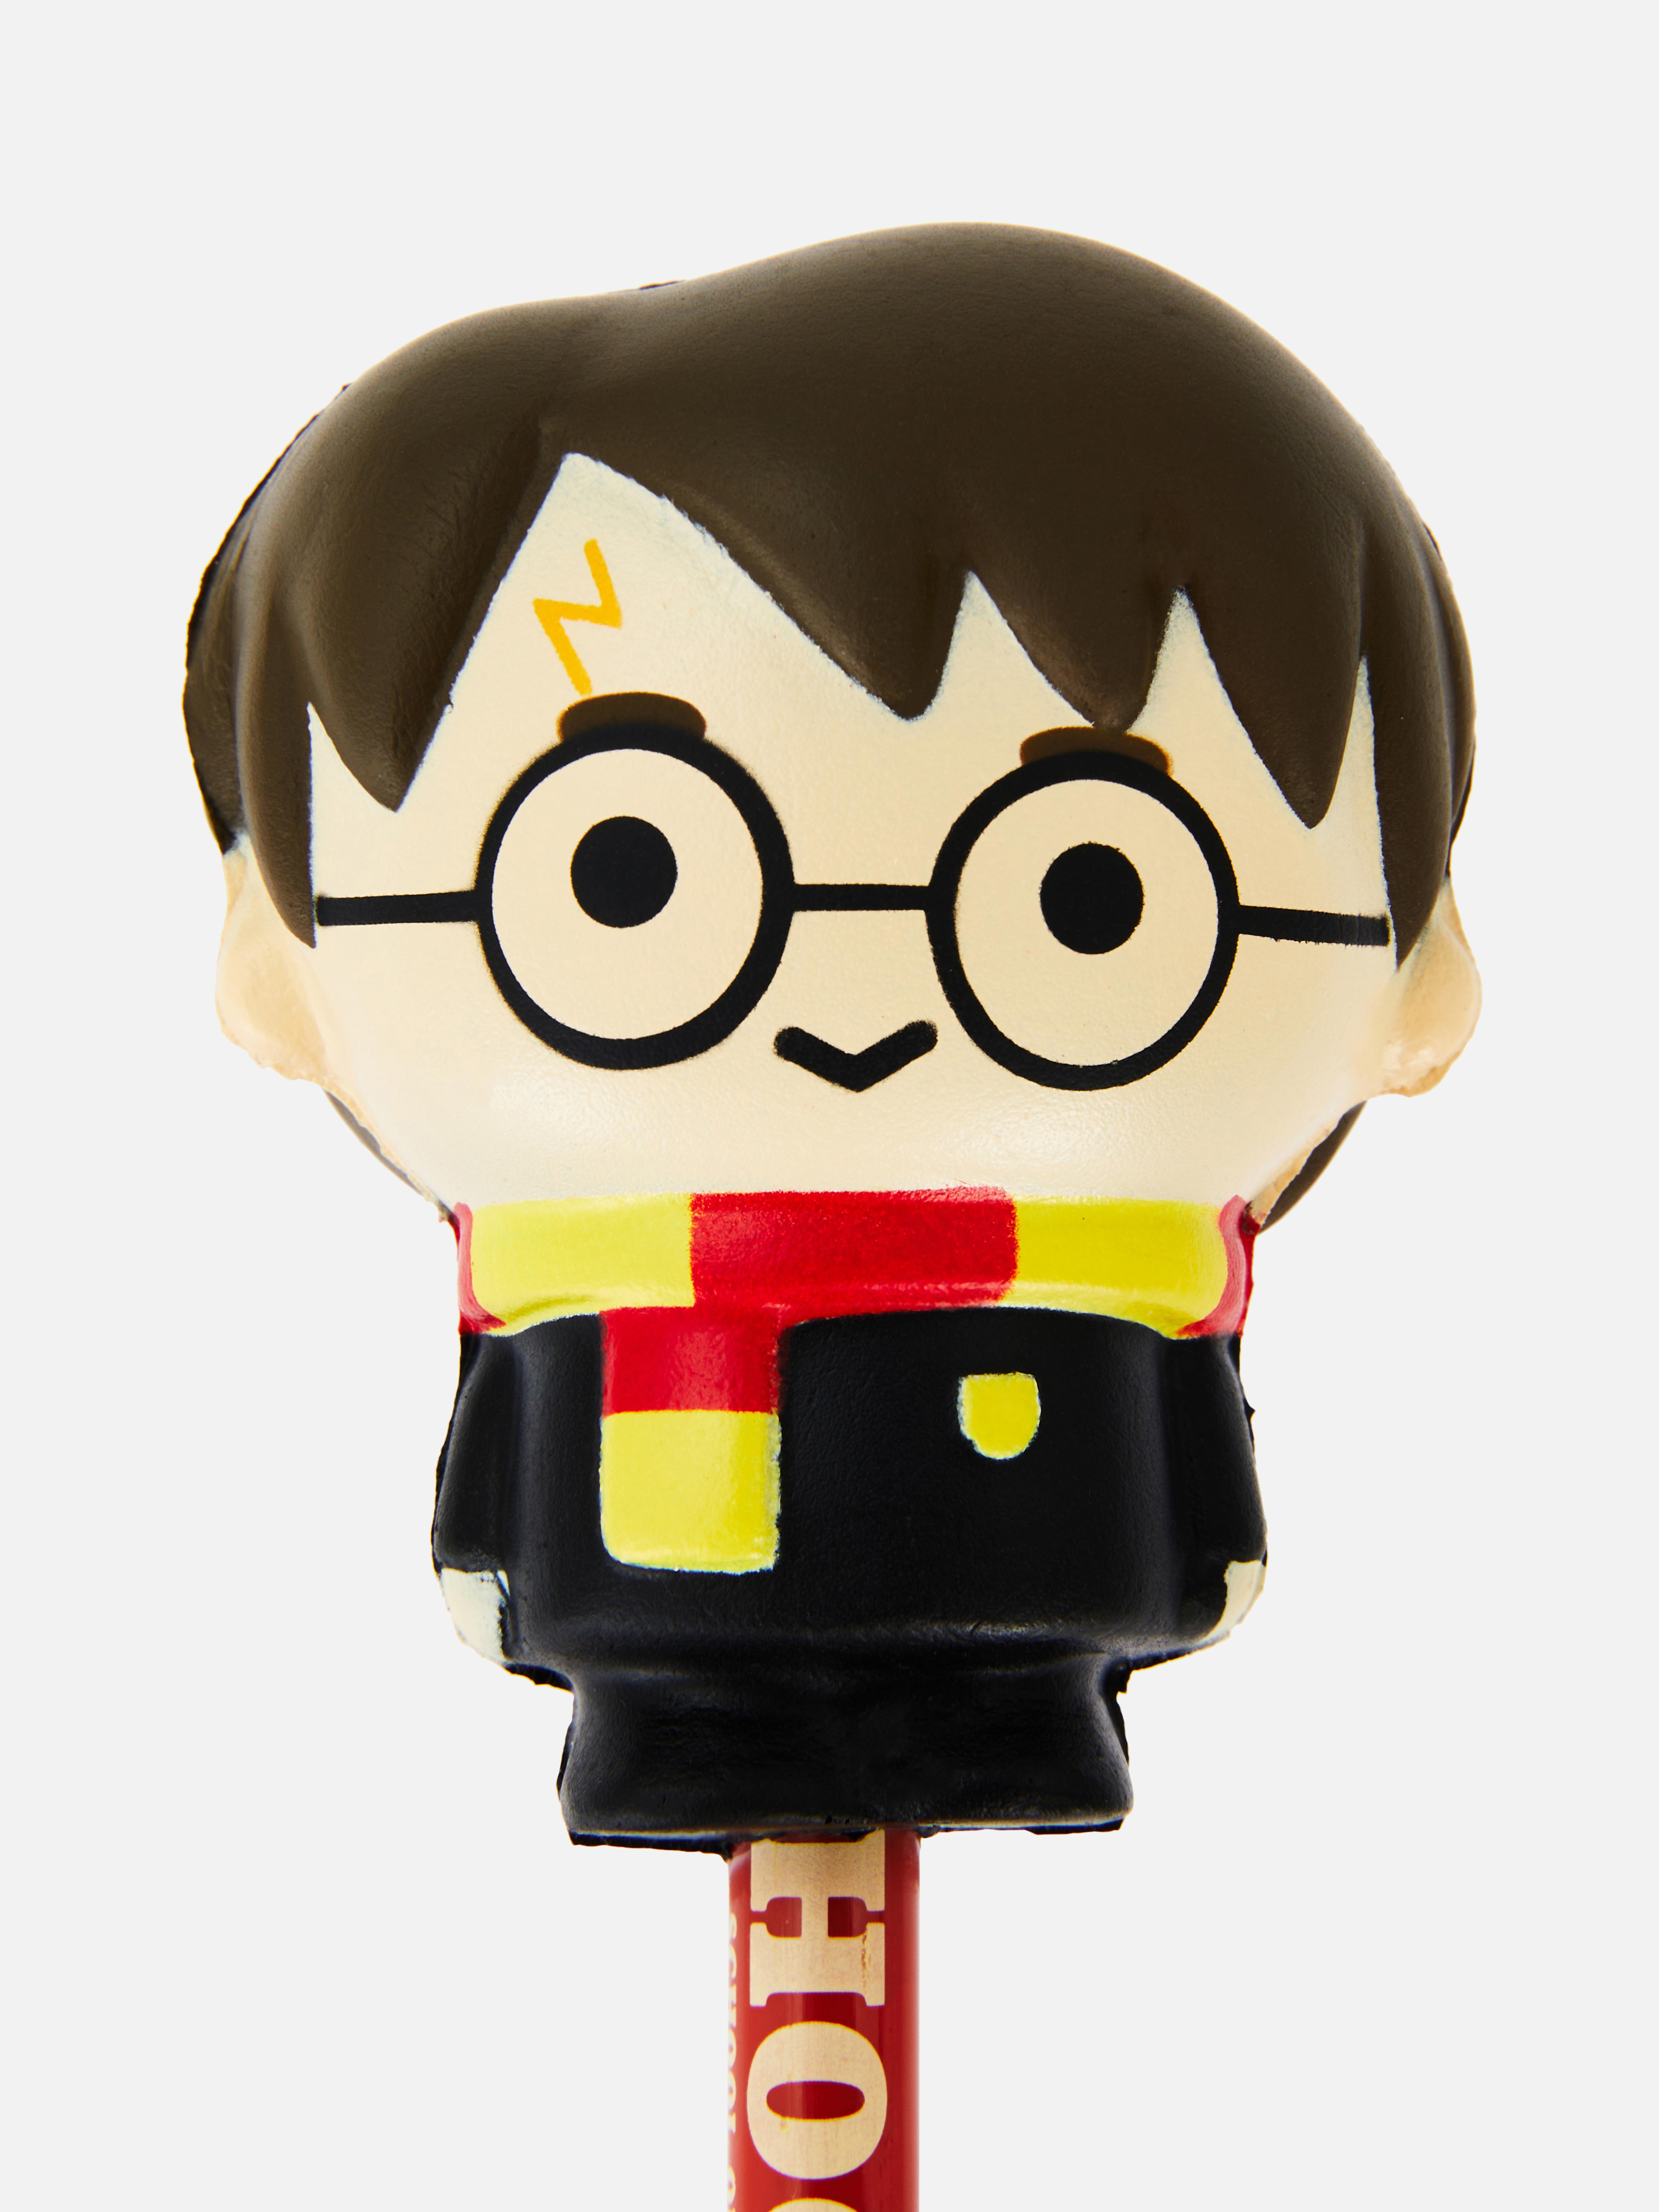 Stylo Harry Potter 321183 Officiel: Achetez En ligne en Promo